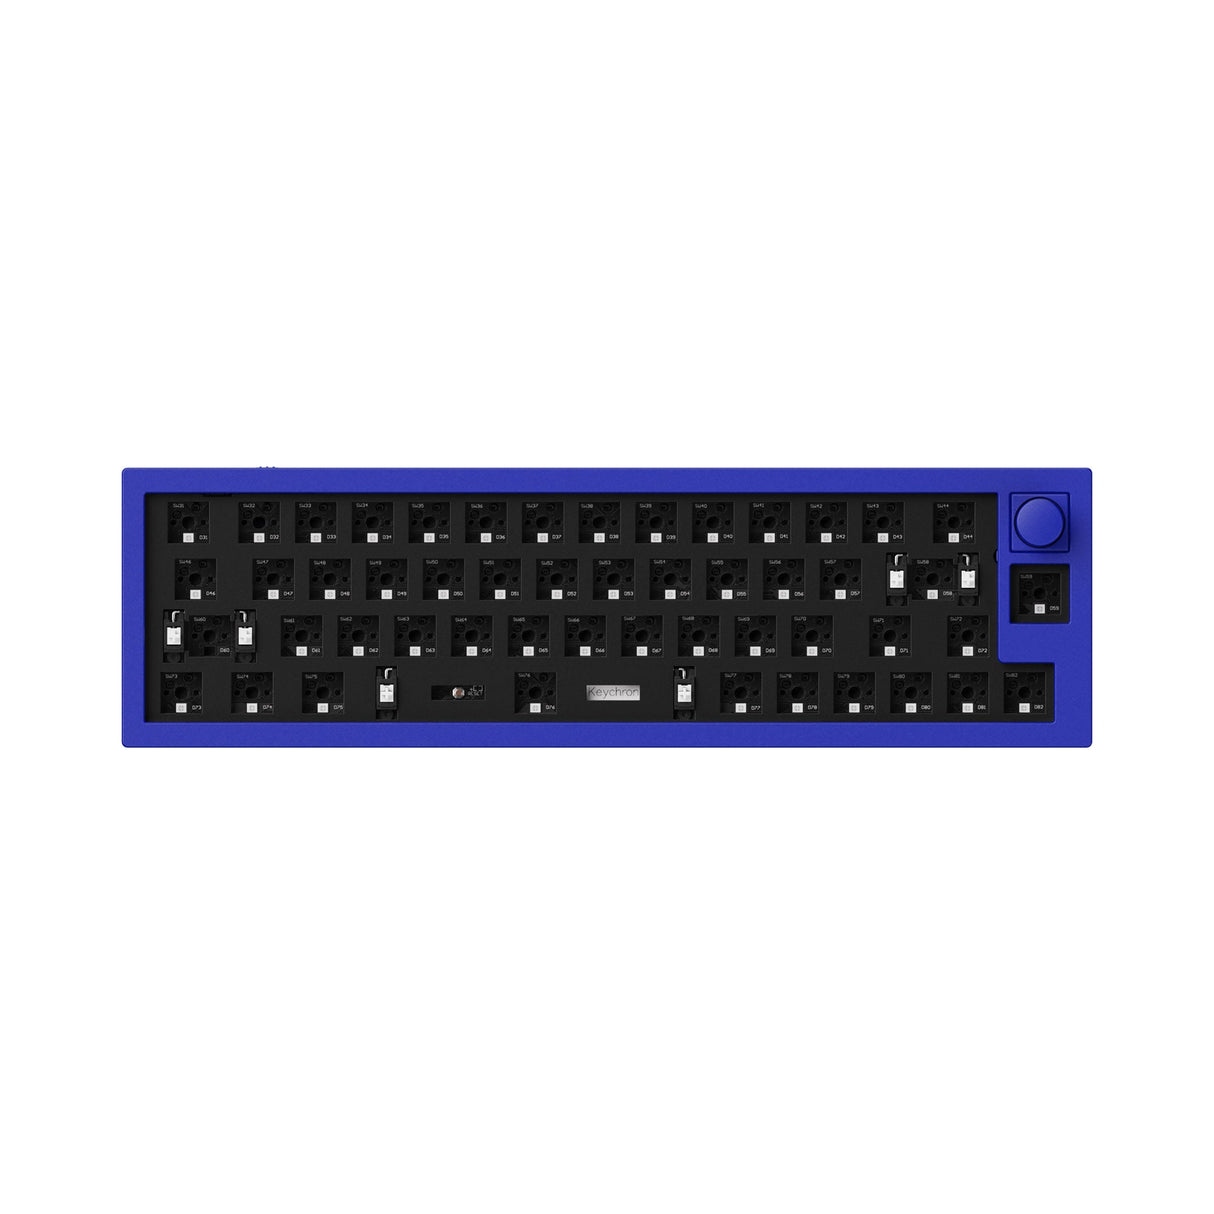 Keychron Q9 QMK/VIA custom mechanical keyboard knob version 40 percent layout full aluminum body for Mac Windows Linux barebone frame blue